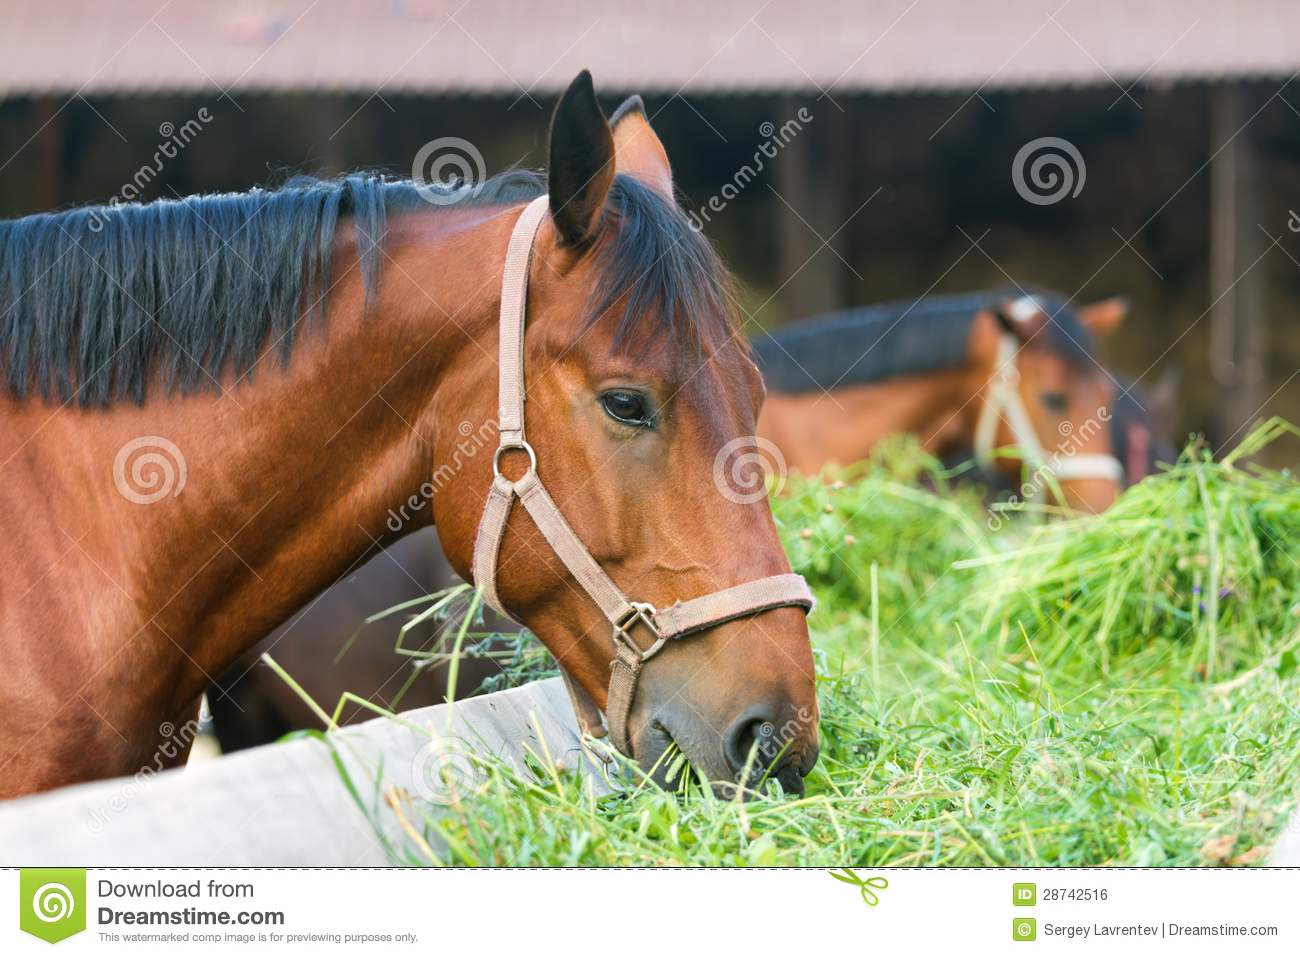 Horse Eating Hay Royalty Free Stock Image   Image  28742516